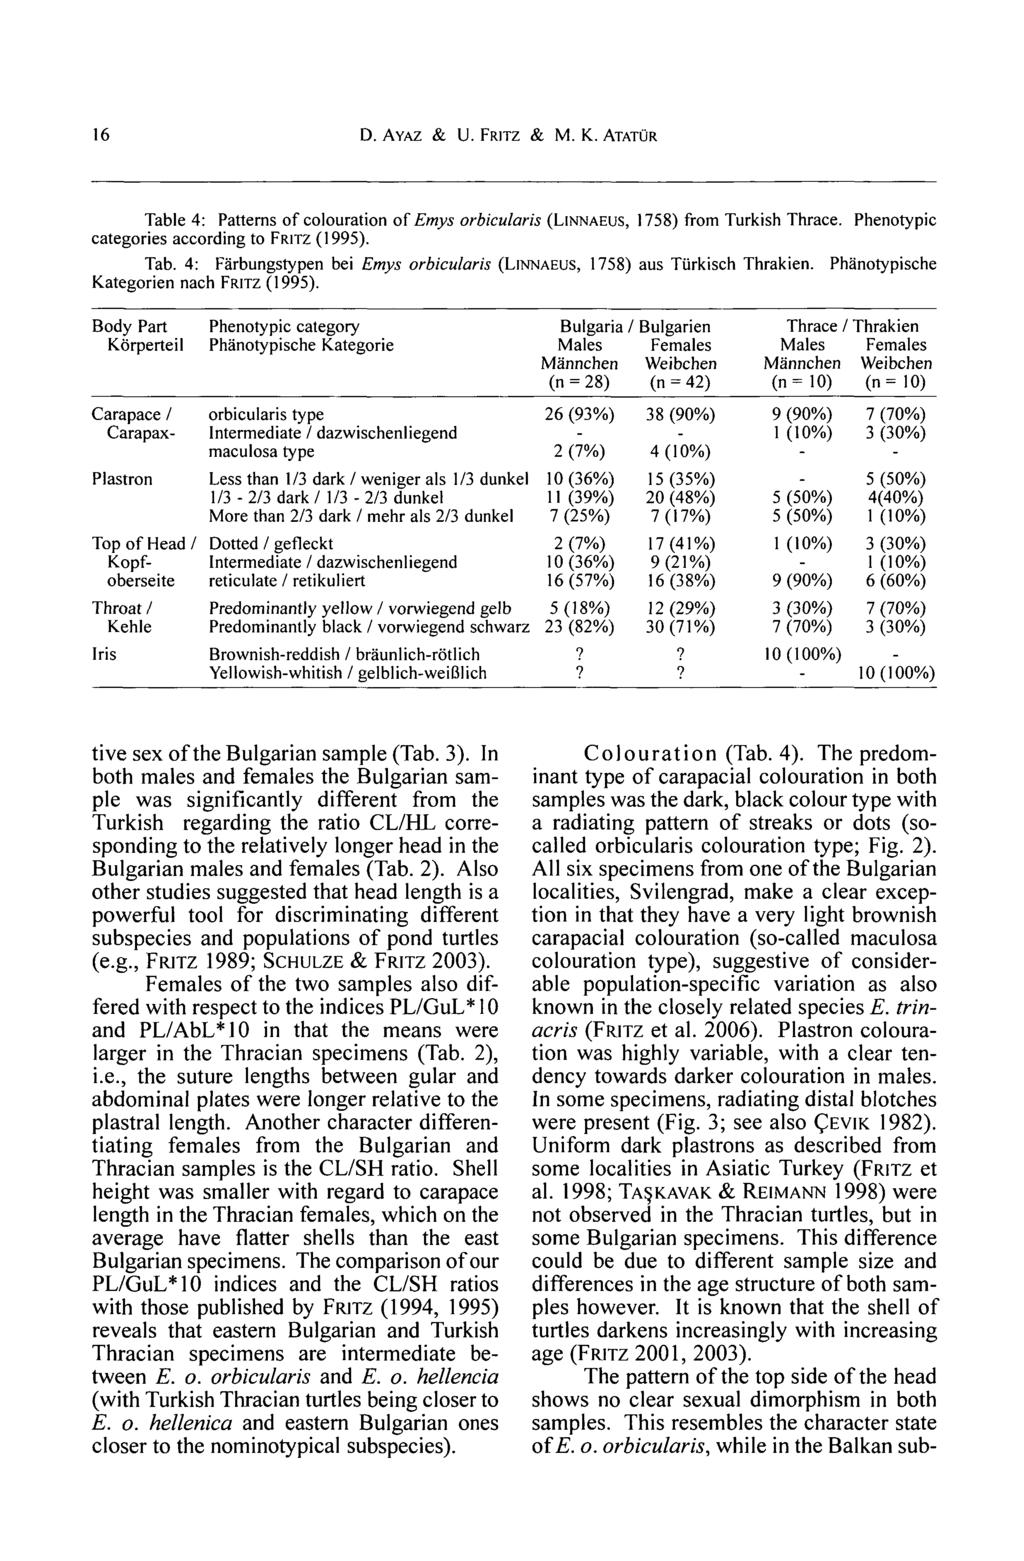 16 D. AYAZ & U. FRITZ & M. K. ATATÜR Table 4: Patterns of colouration of Emys orbicularis (LINNAEUS, 1758) from Turkish Thrace. Phenotypic categories according to FRITZ (1995). Tab. 4: Färbungstypen bei Emys orbicularis (LINNAEUS, 1758) aus Türkisch Thrakien.